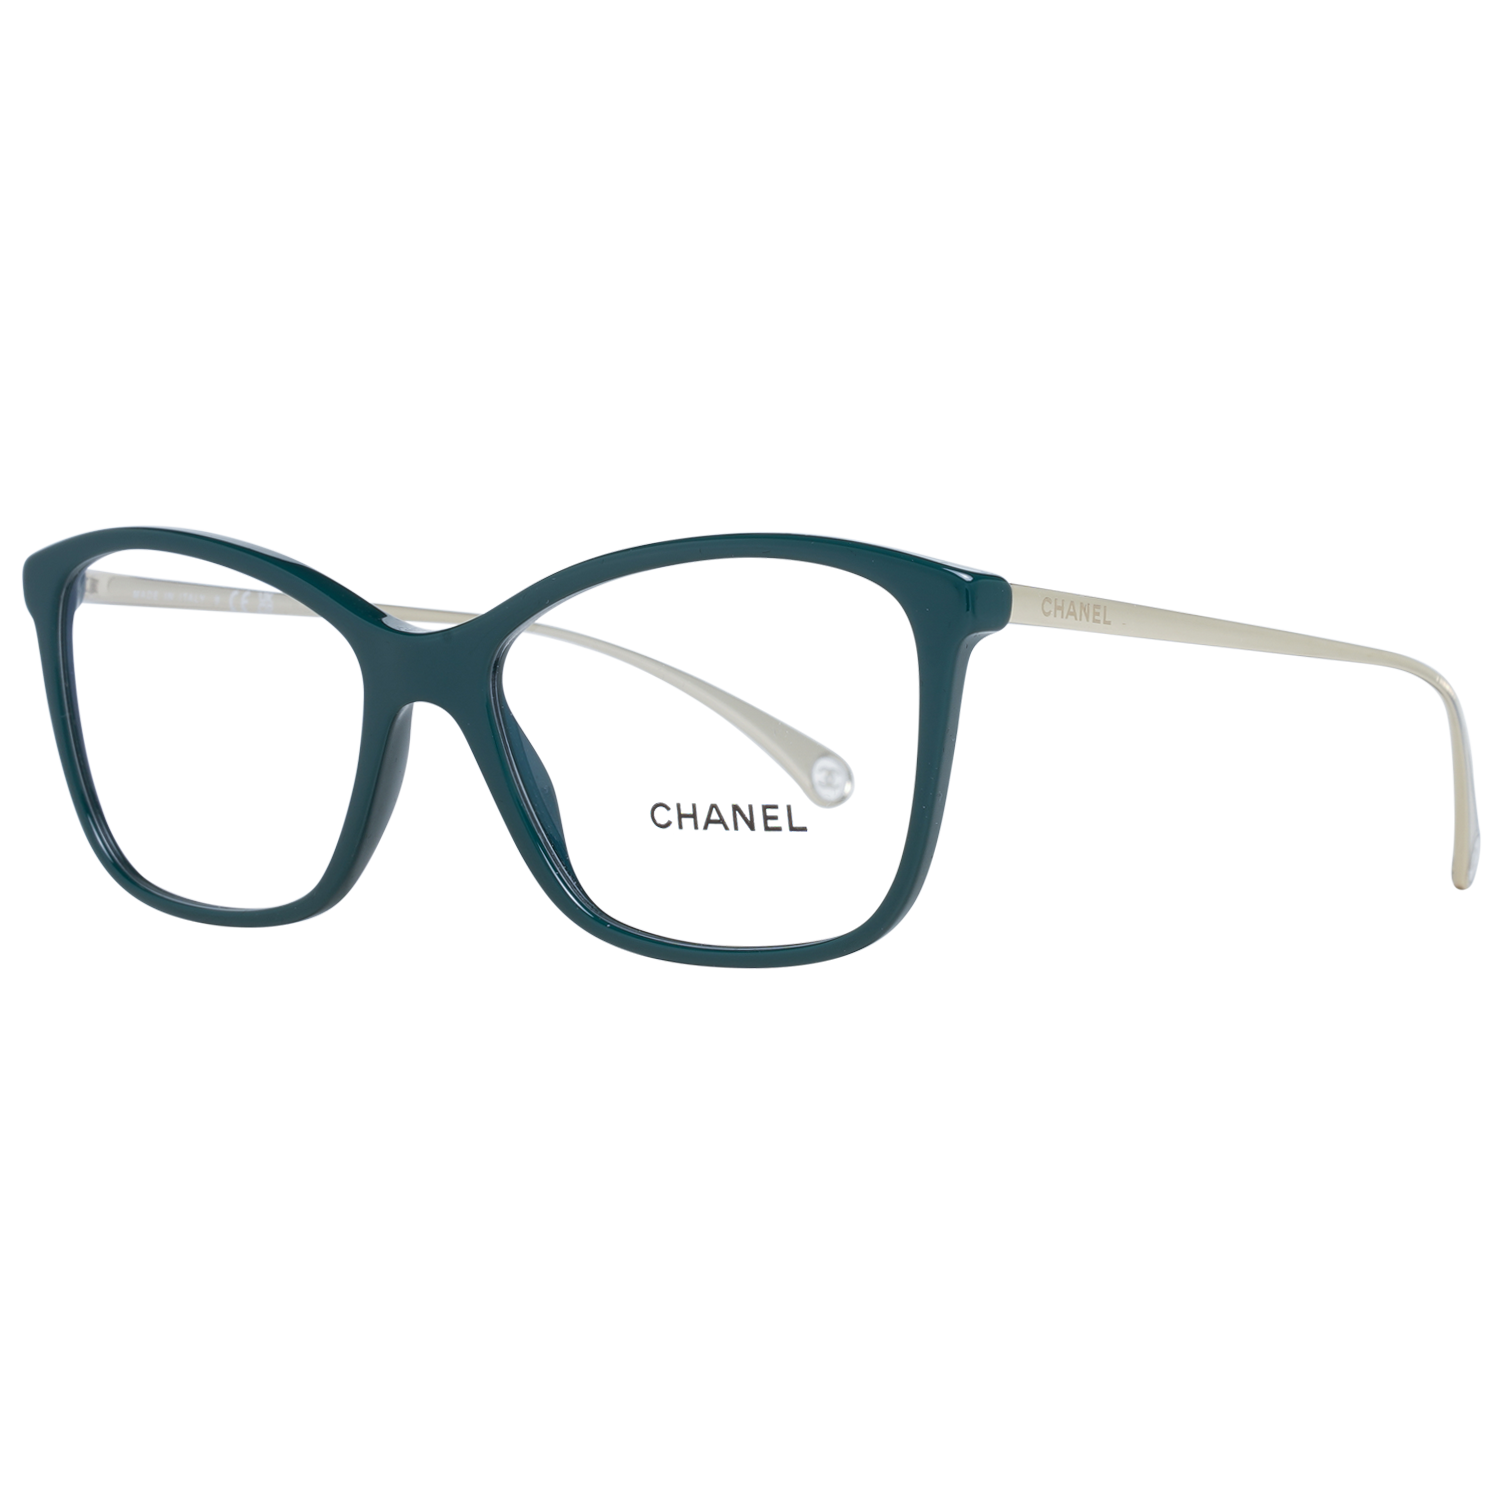 Chanel Frames Chanel Glasses Frames 0CH3422 1699 54mm Eyeglasses Eyewear UK USA Australia 